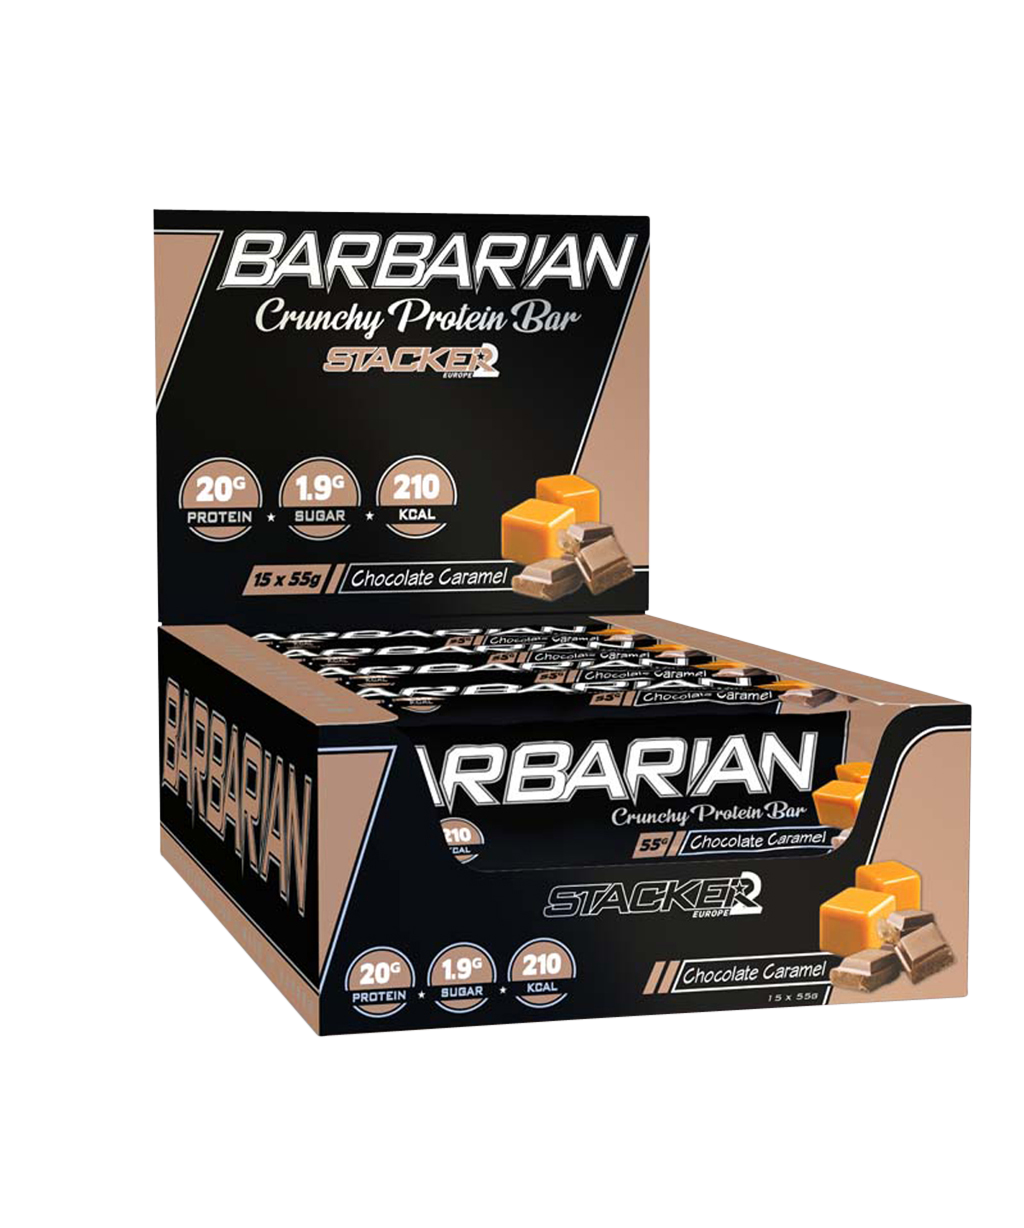 Barbarian Crunchy Protein Bar 15x55g